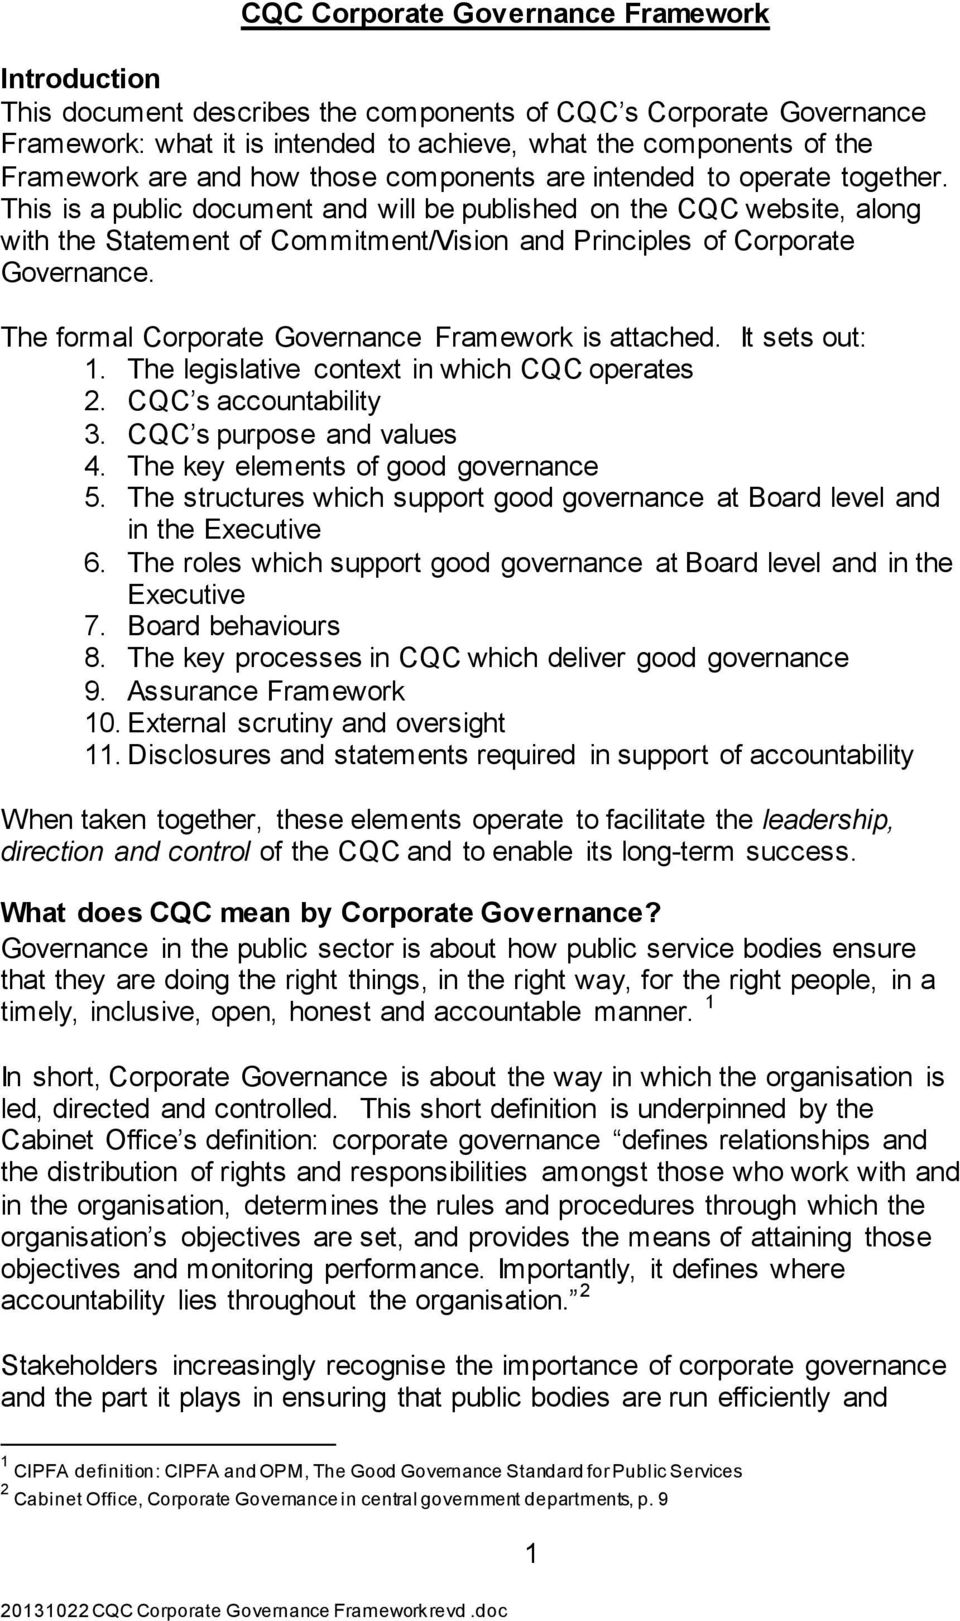 cqc corporate governance framework - pdf